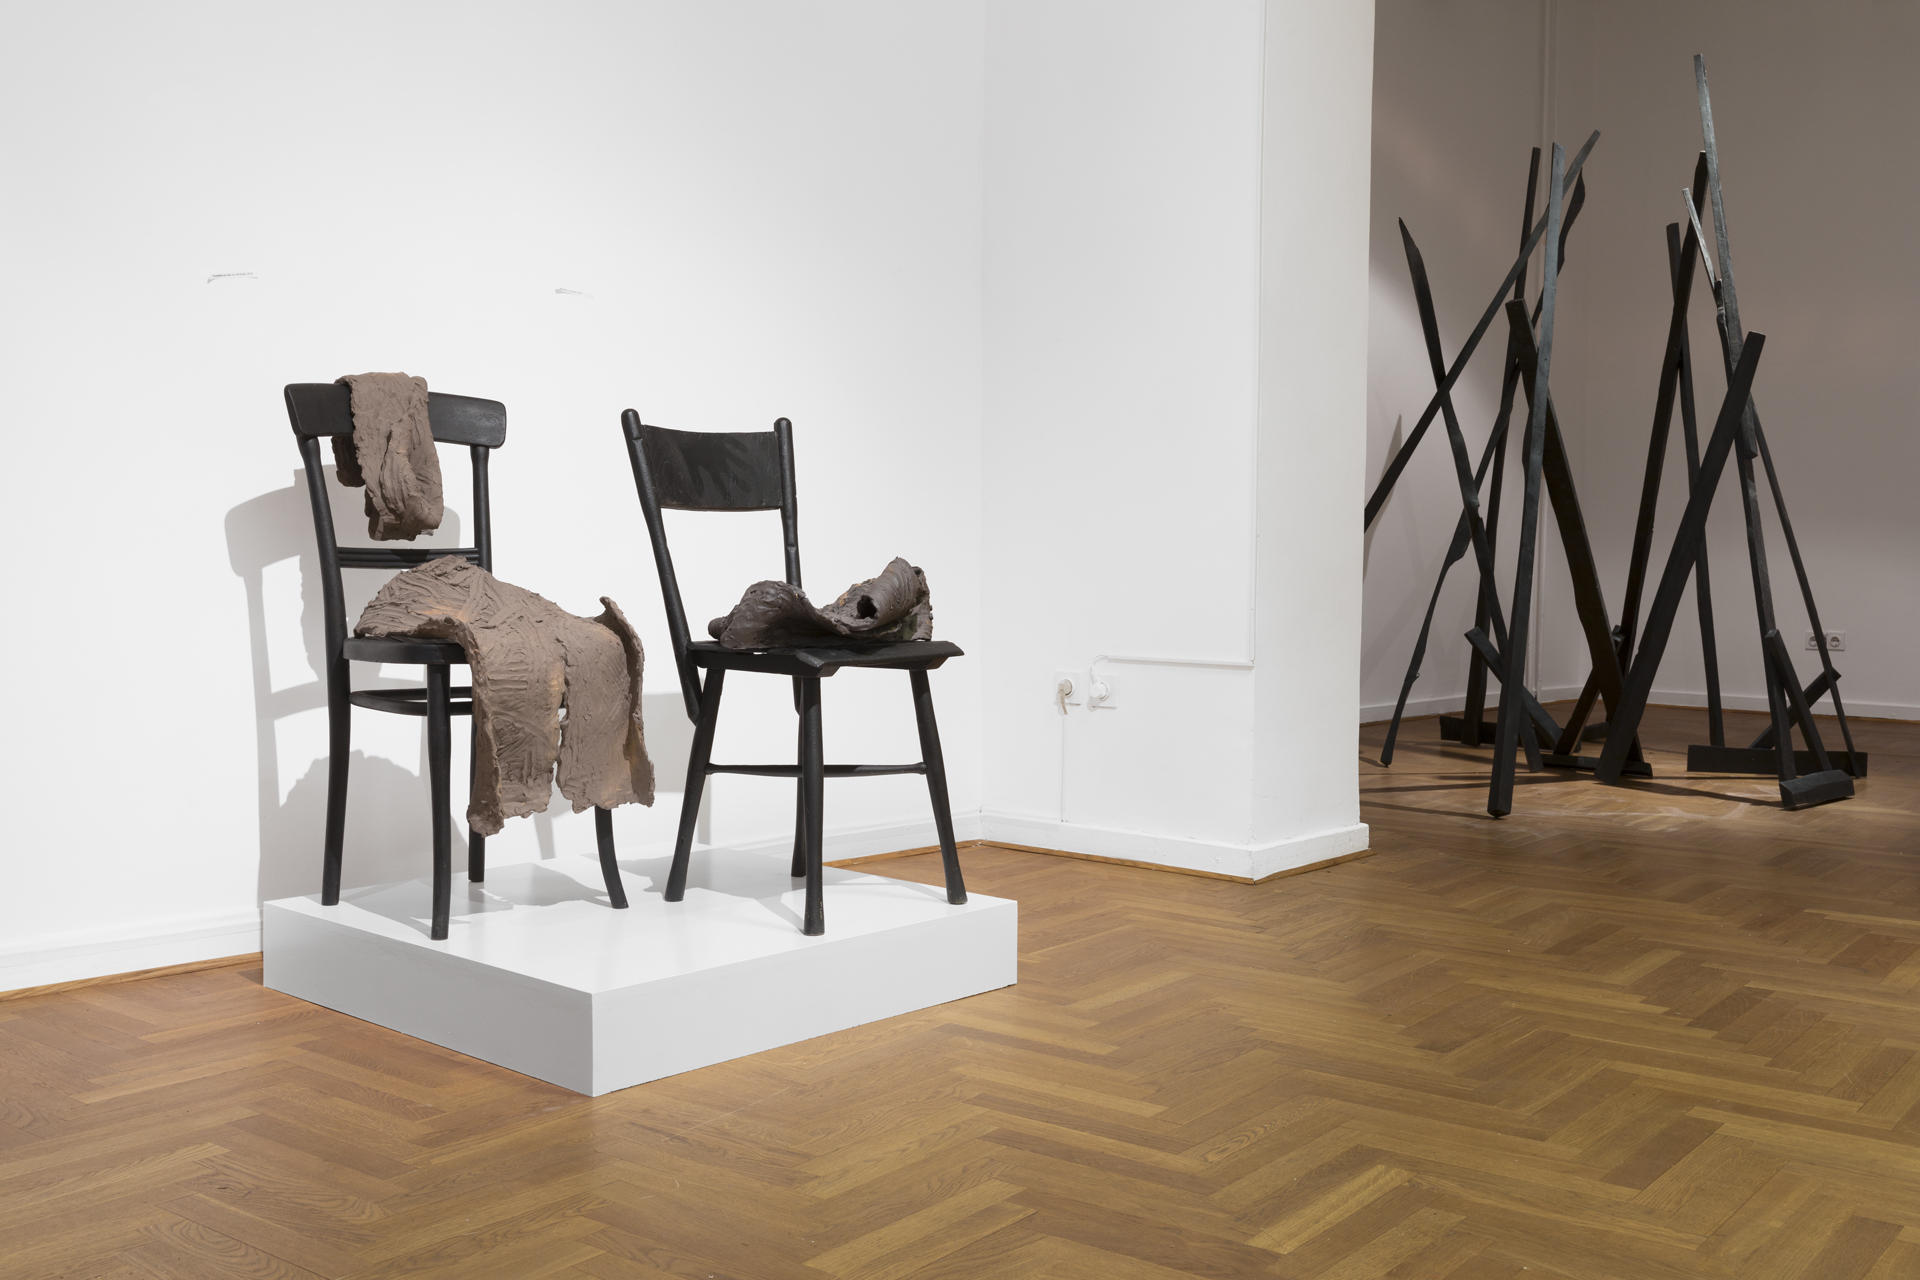 Dragica Čadež, A Story of Wood and Clay, City Art Gallery Ljubljana